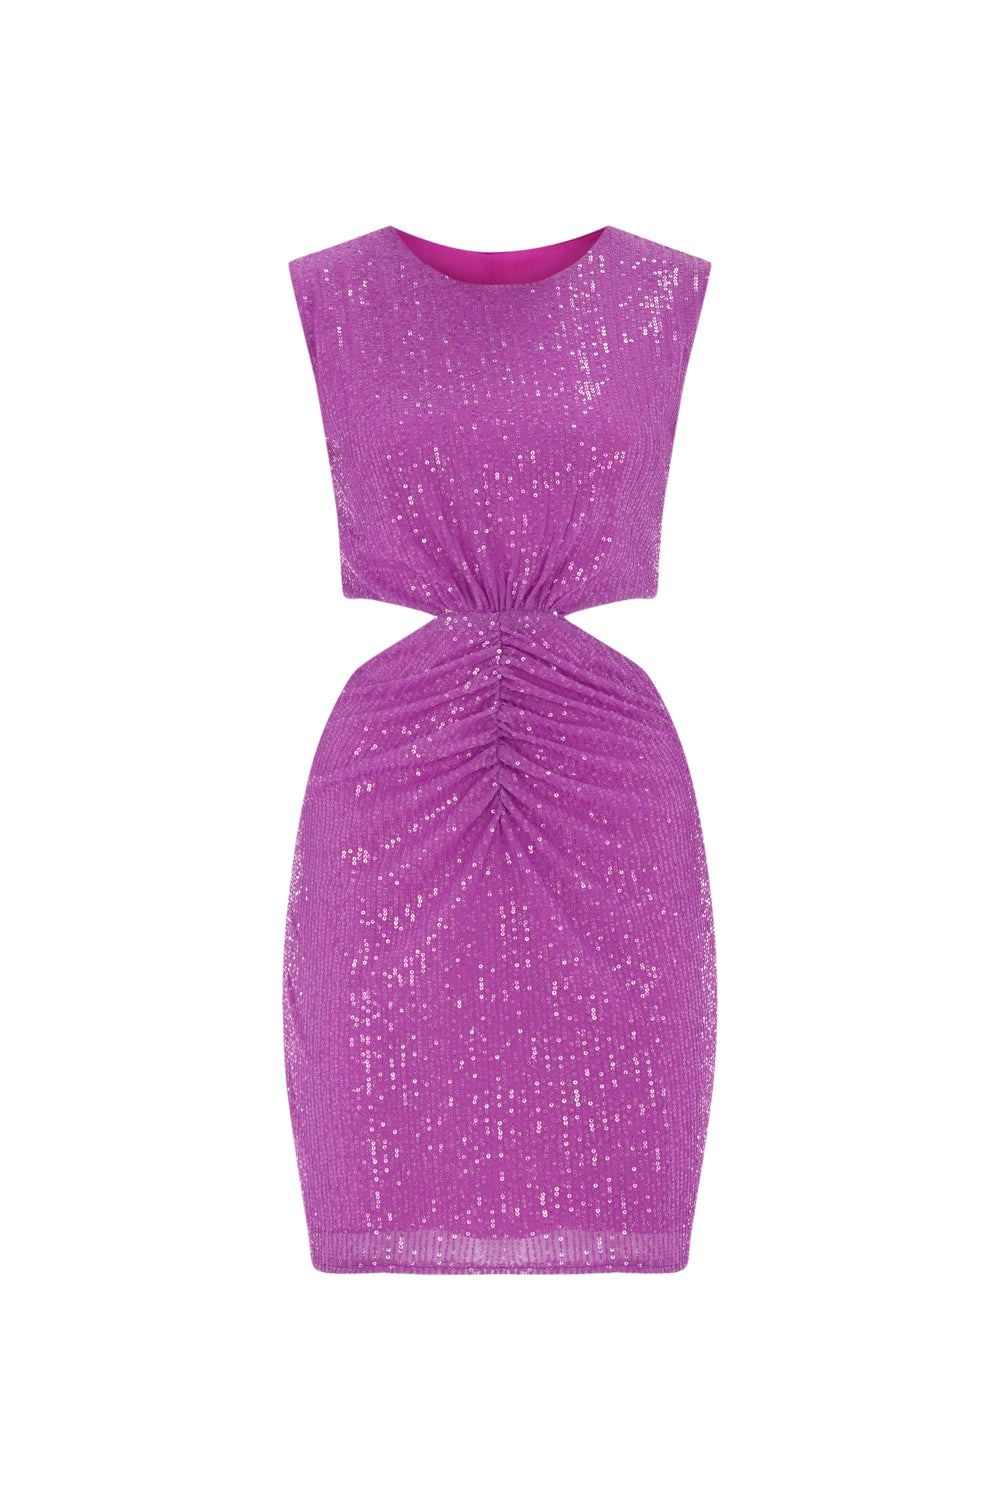 Cut Out Diamante Sequin Mini Dress - Fuchsia Pink